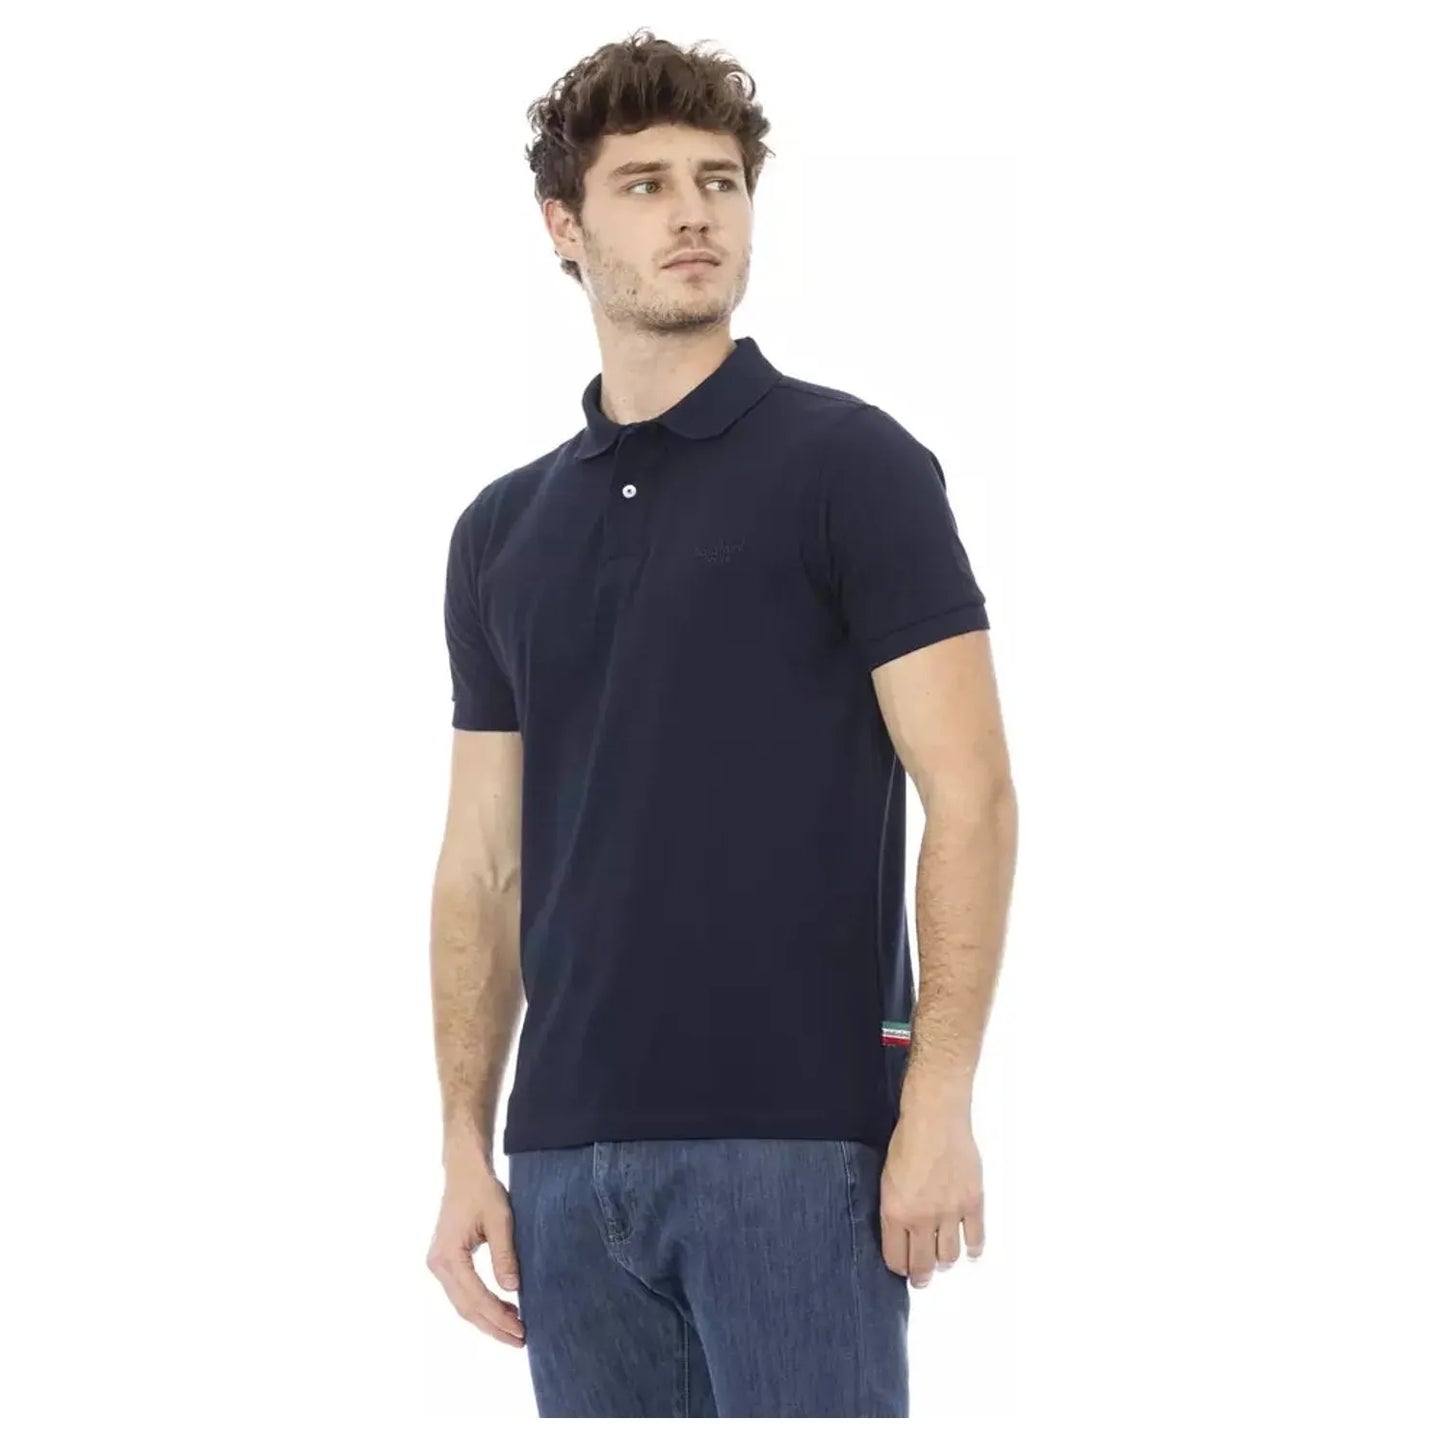 Baldinini Trend Elegant Blue Cotton Polo with Chic Embroidery blue-cotton-polo-shirt-36